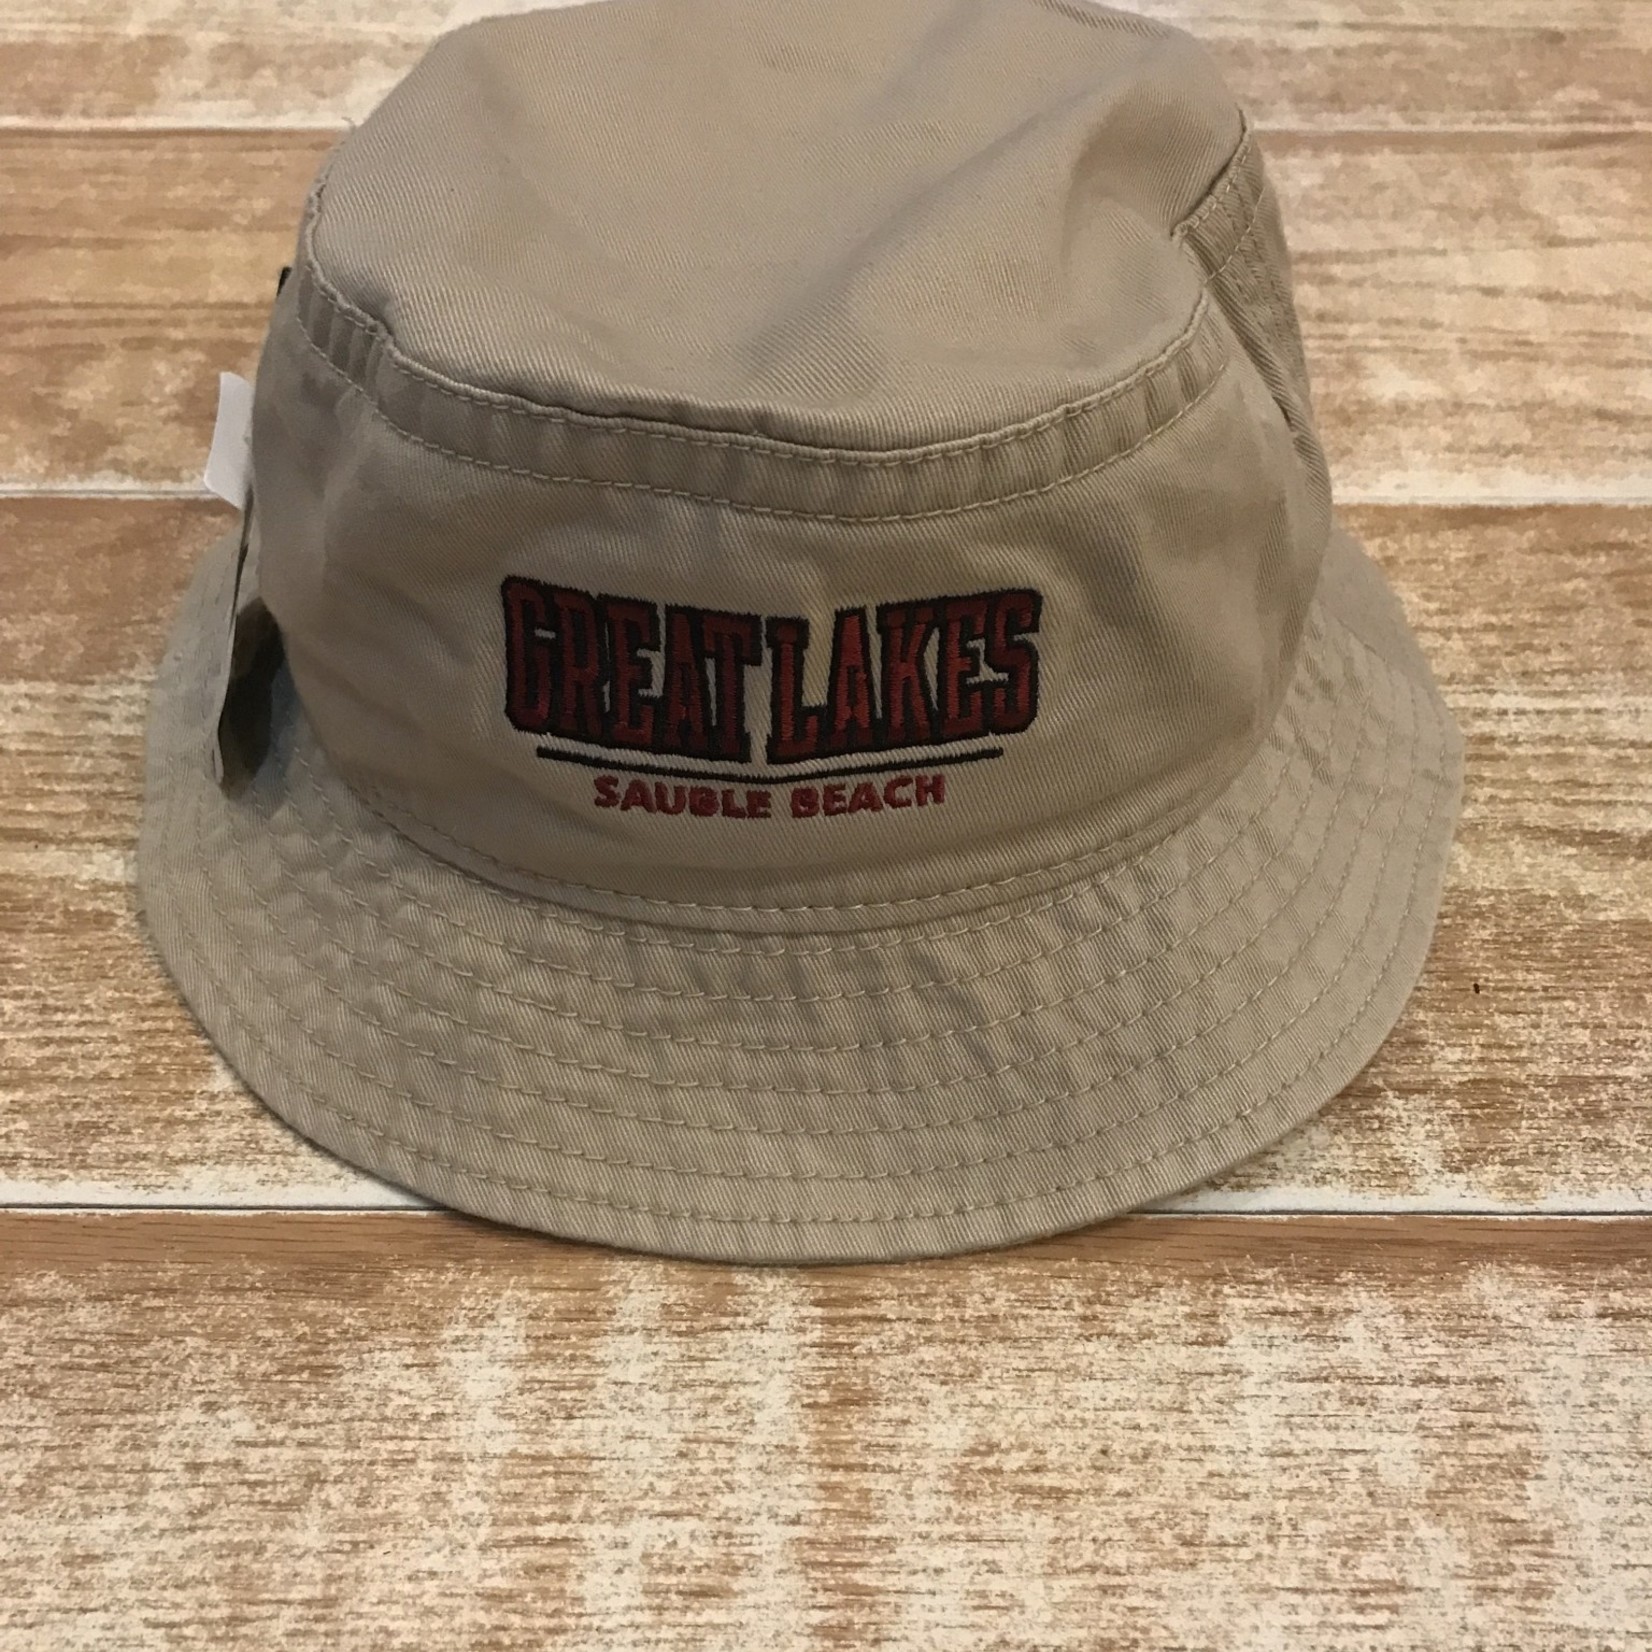 Sauble Beach Great Lakes SB bucket hat